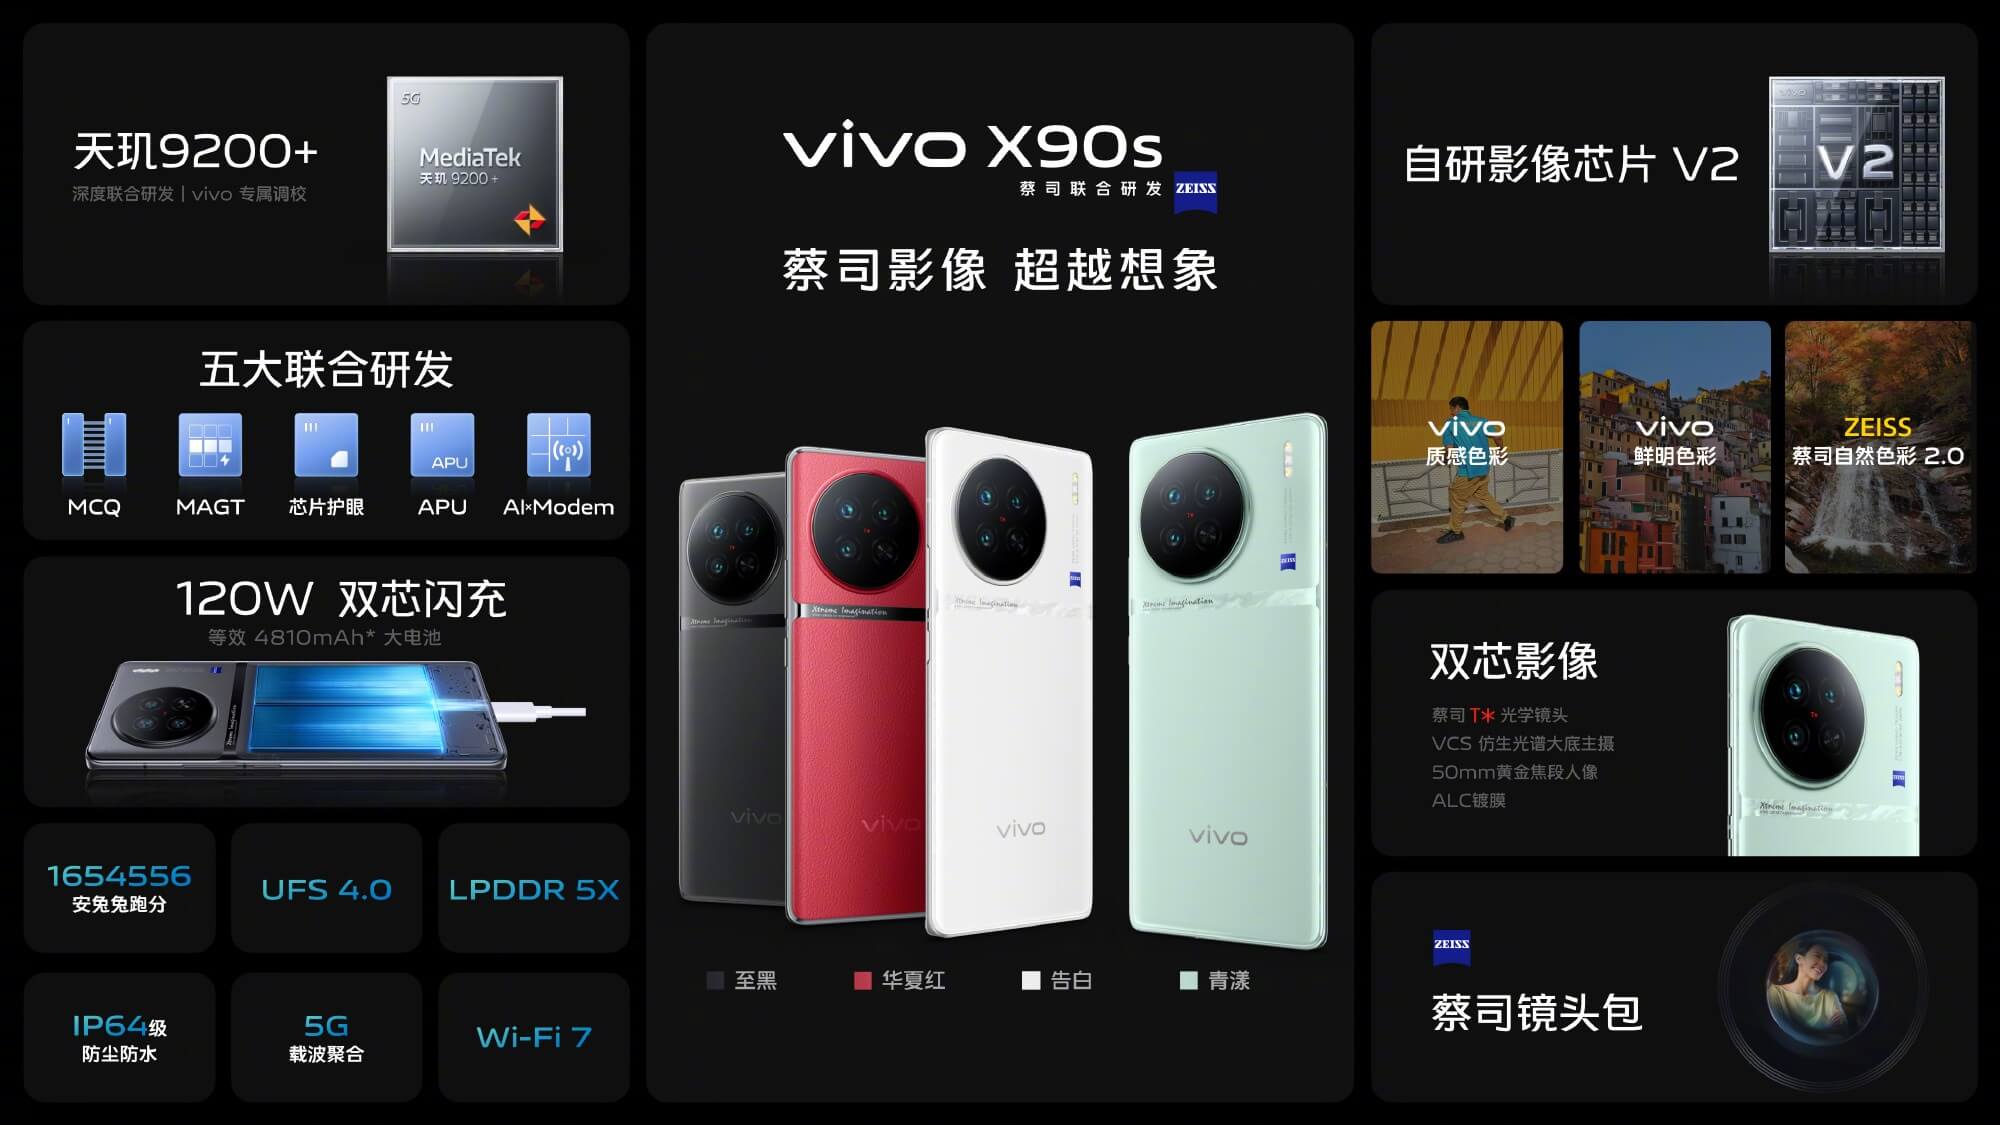 Vivo X90s features cn